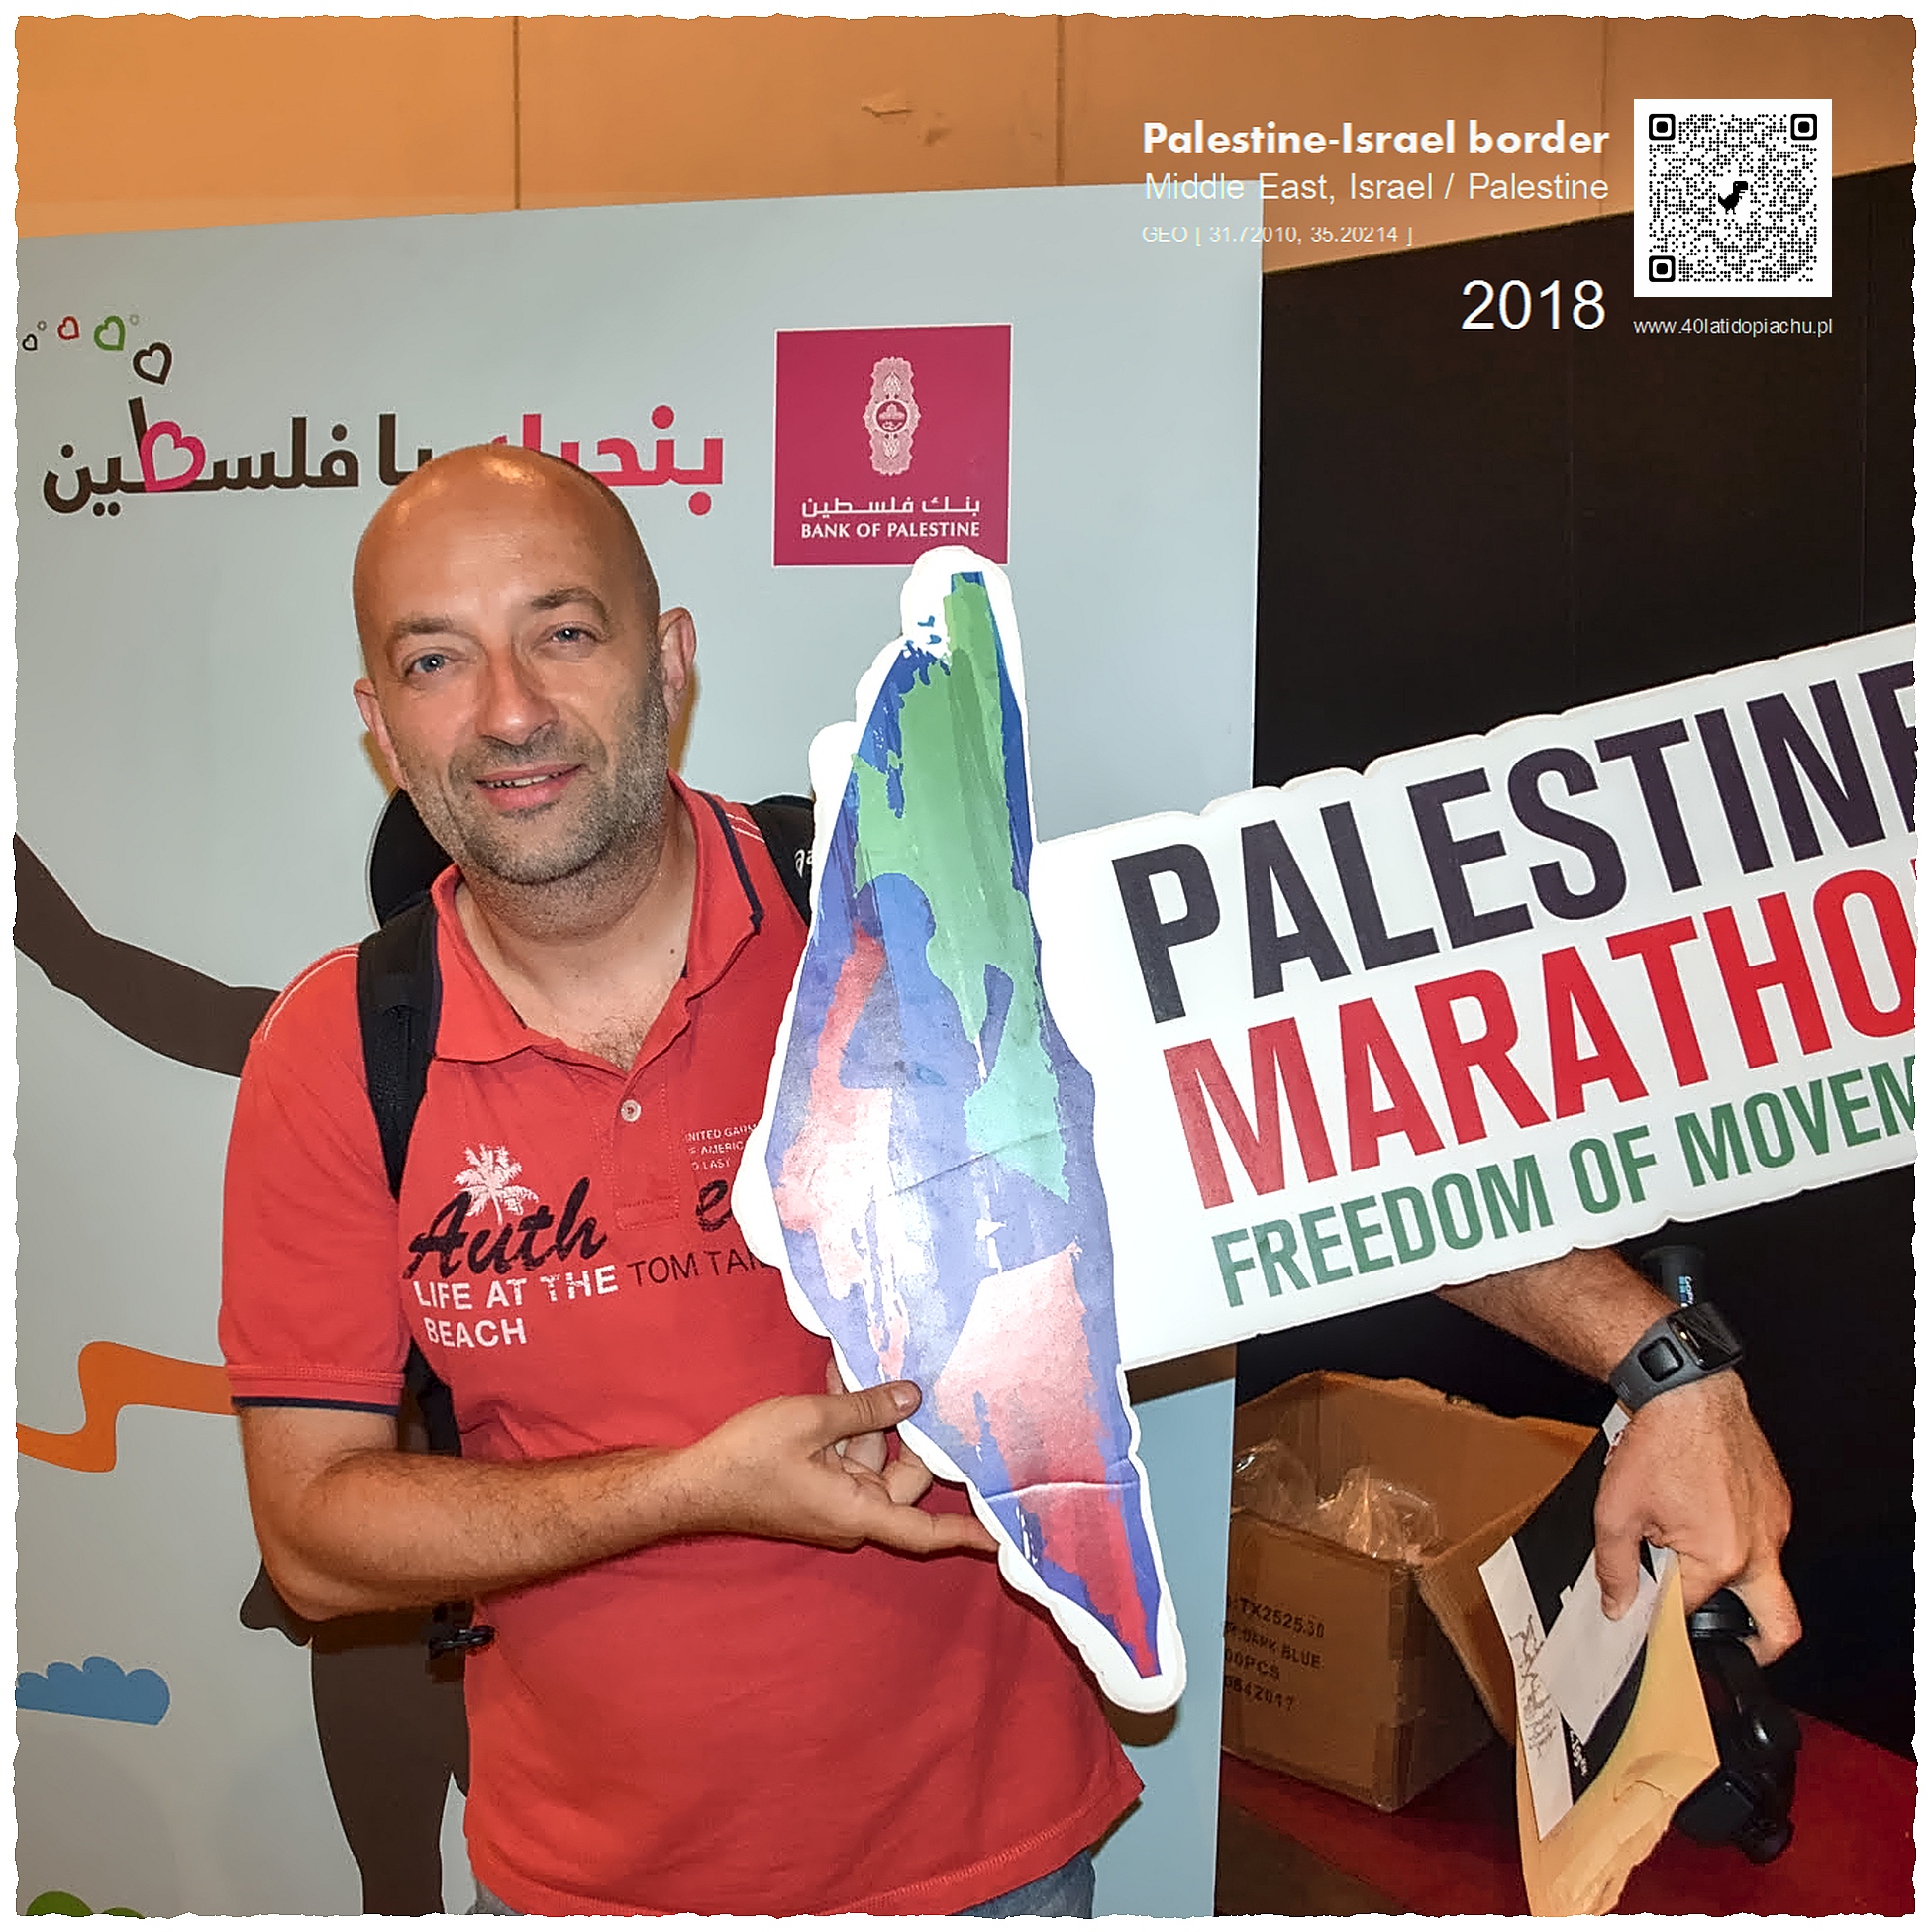 Palestyna Maraton